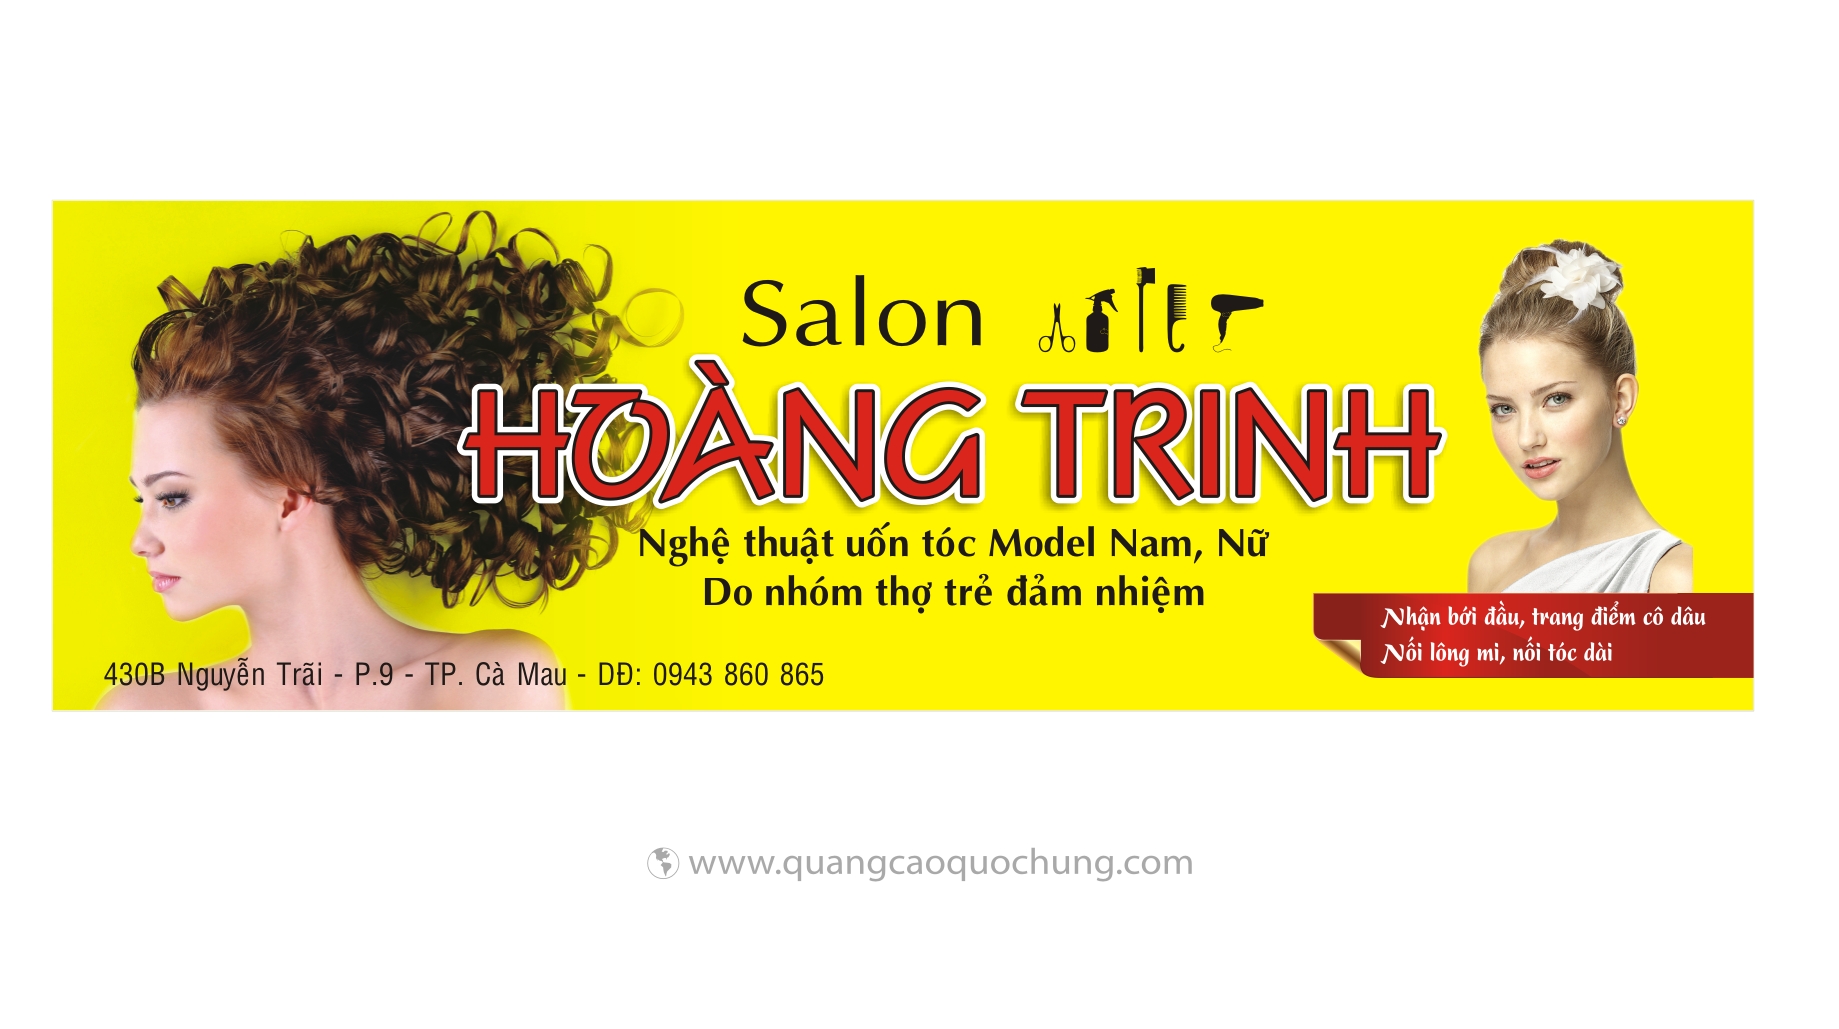 Bảng hiệu Salon Hoang Trinh